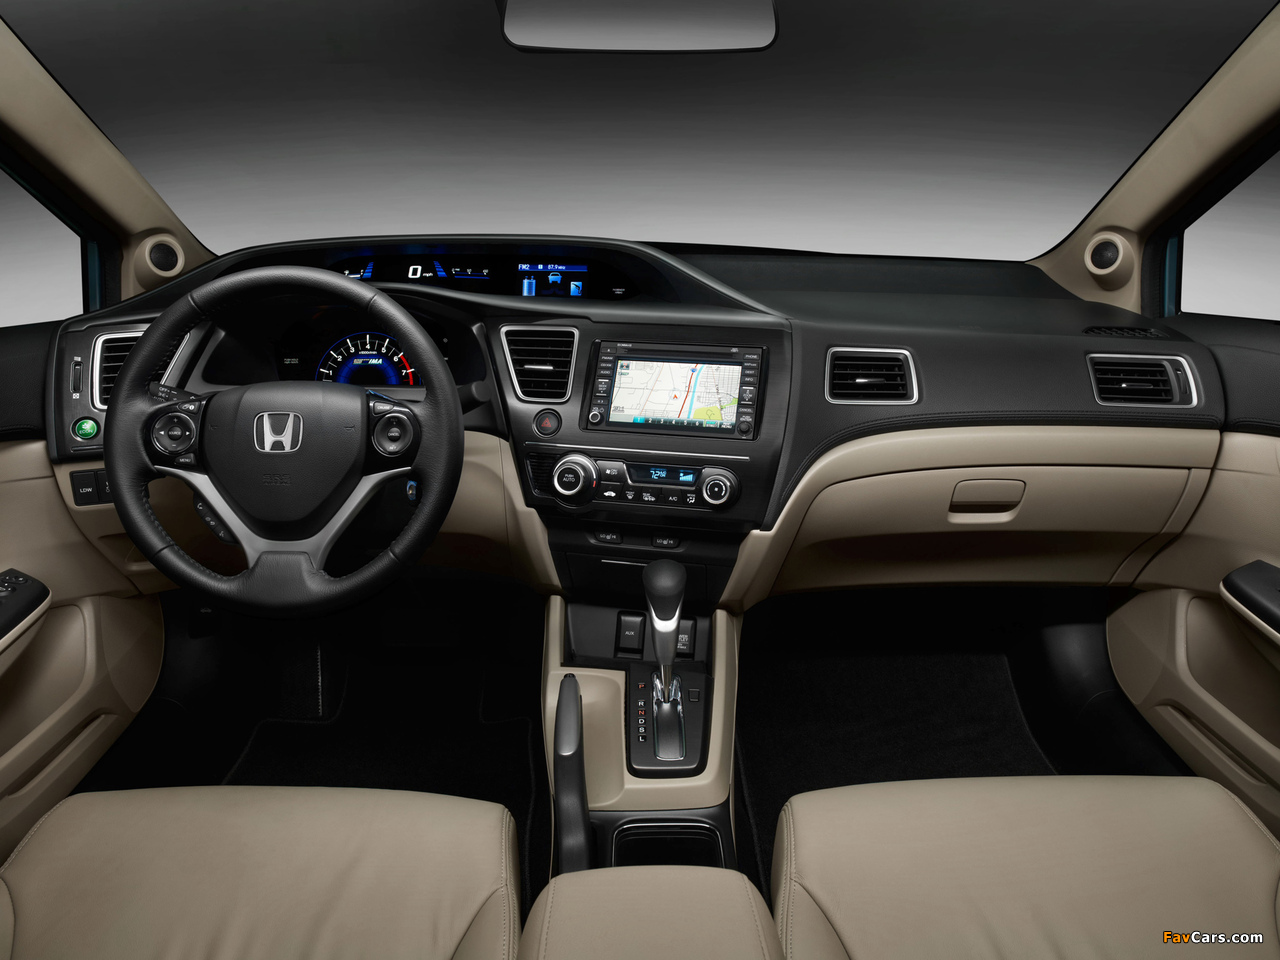 Honda Civic Hybrid 2013 pictures (1280 x 960)